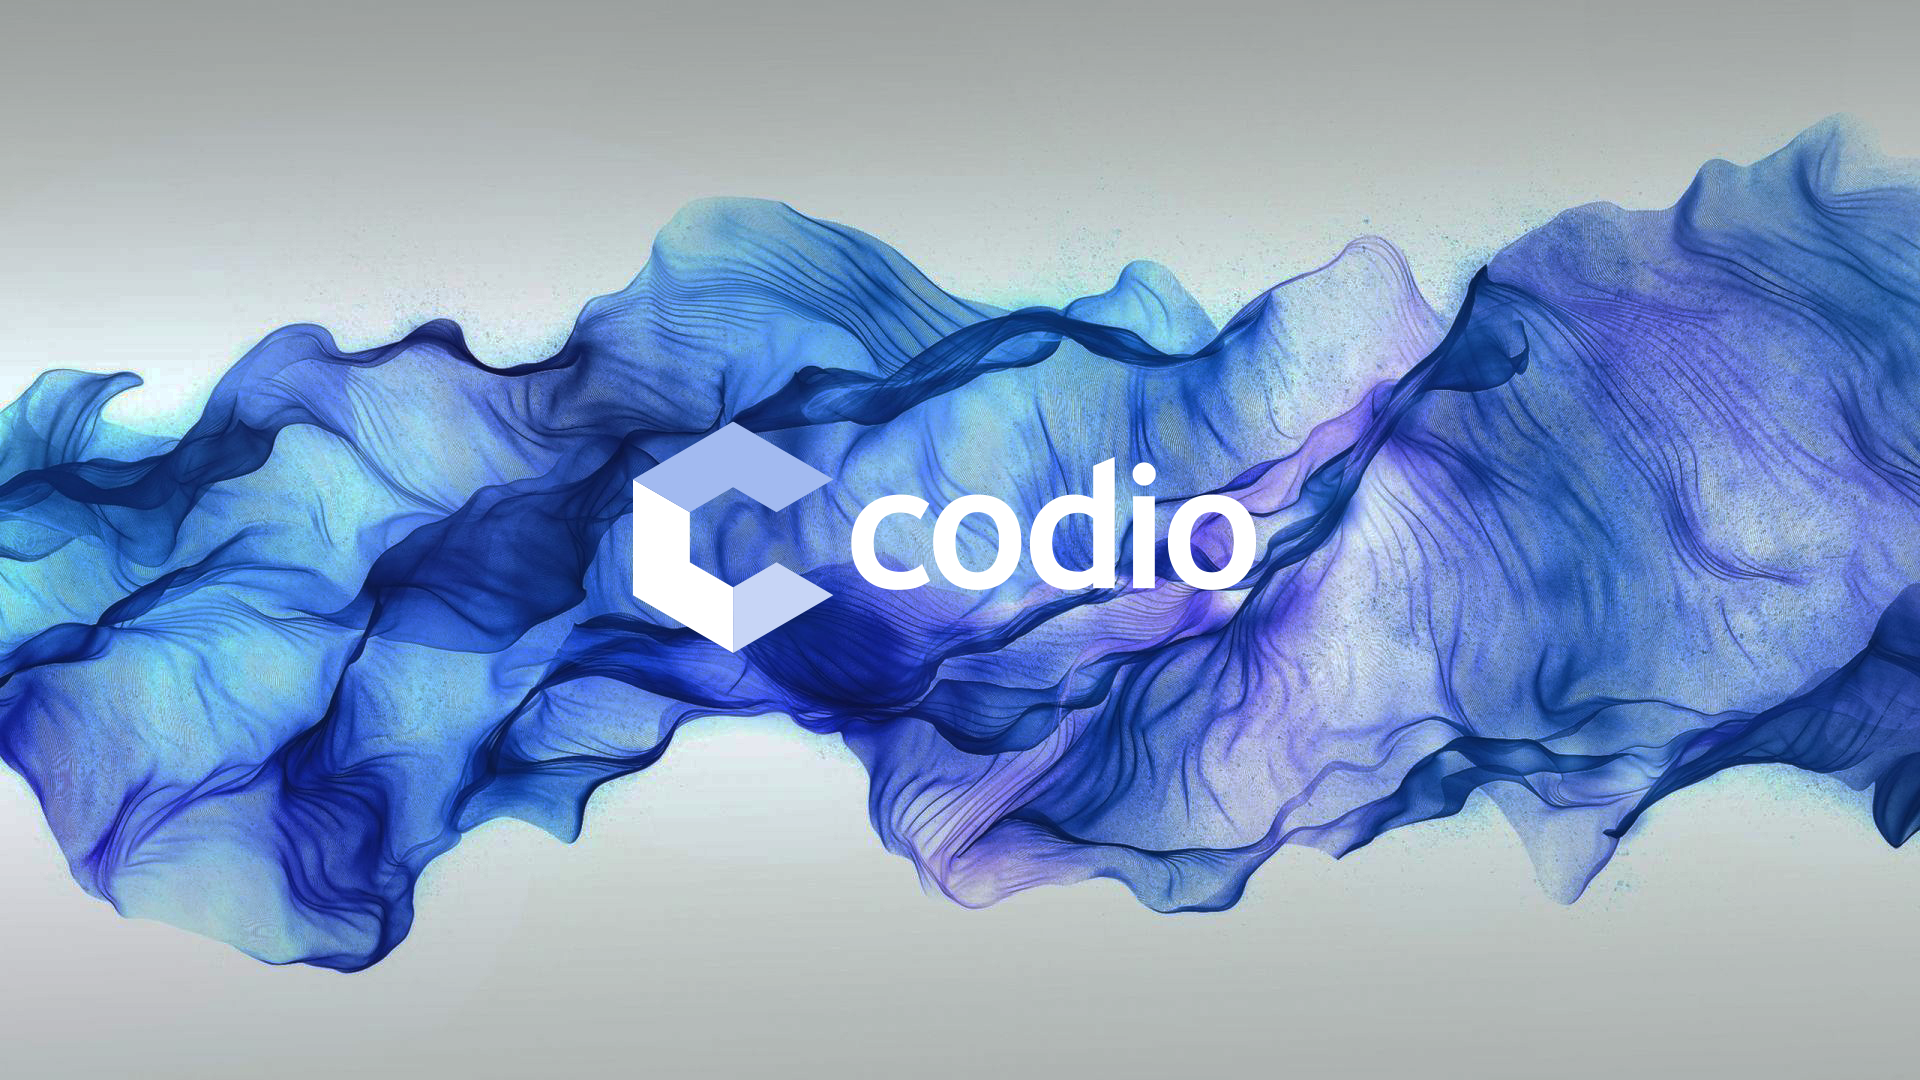 Codio logo treatment